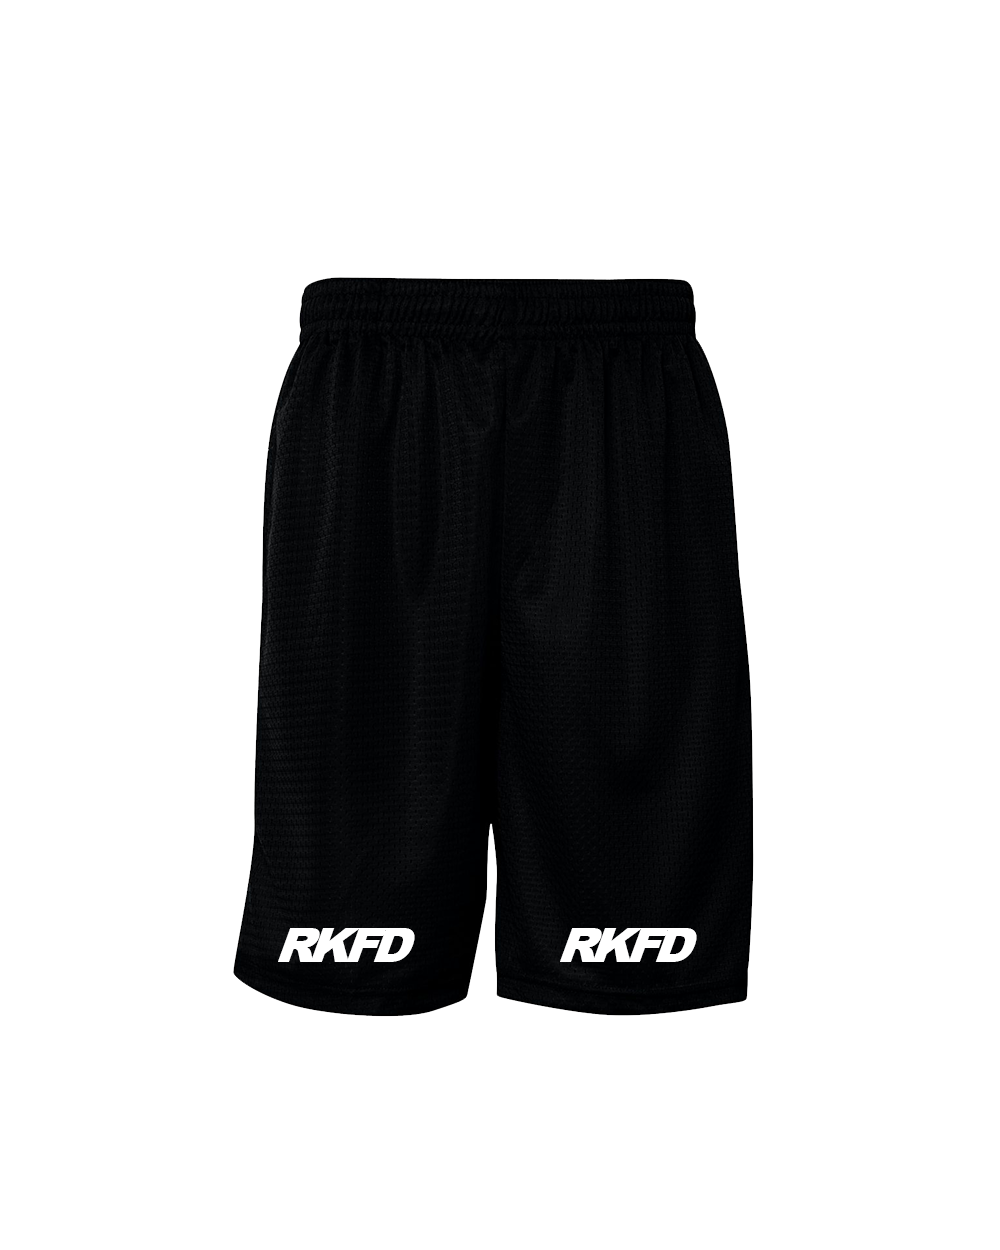 RKFD Gym Shorts (Black)